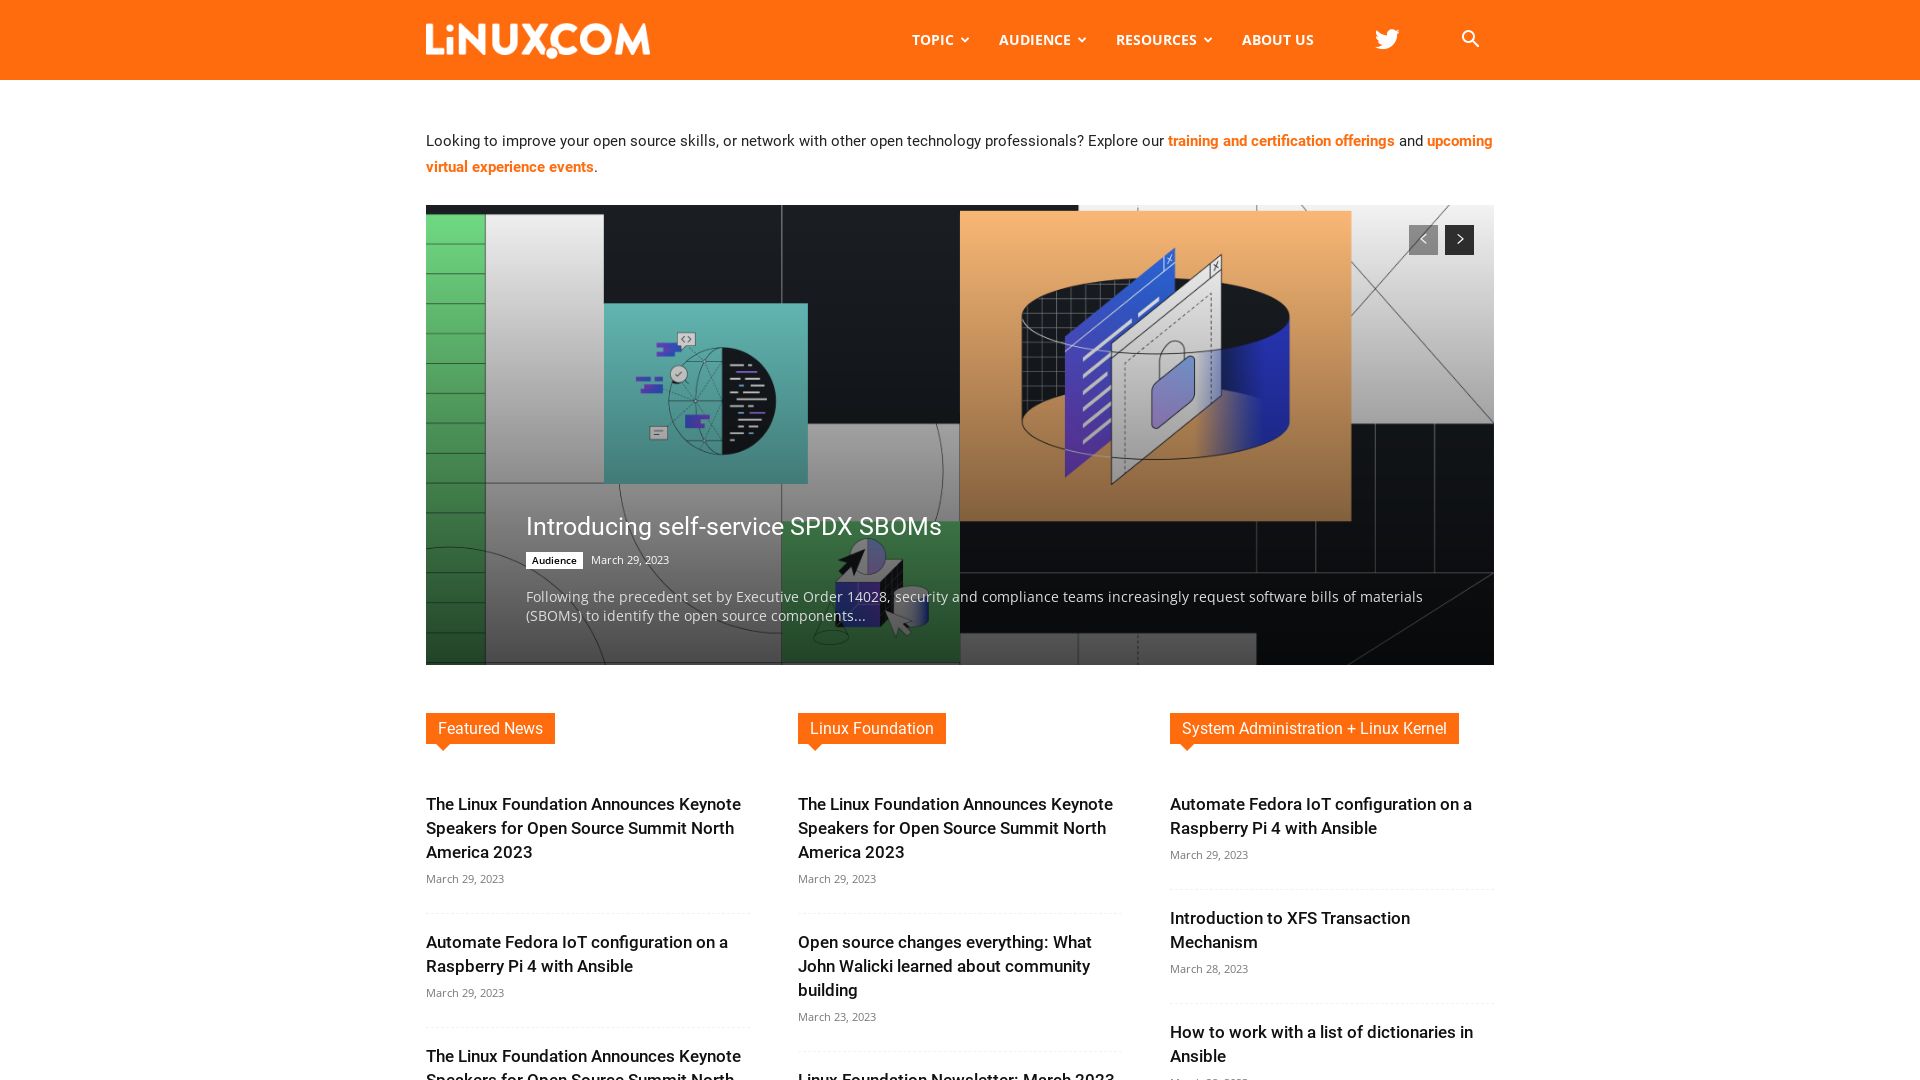 Website status linux.com is   ONLINE